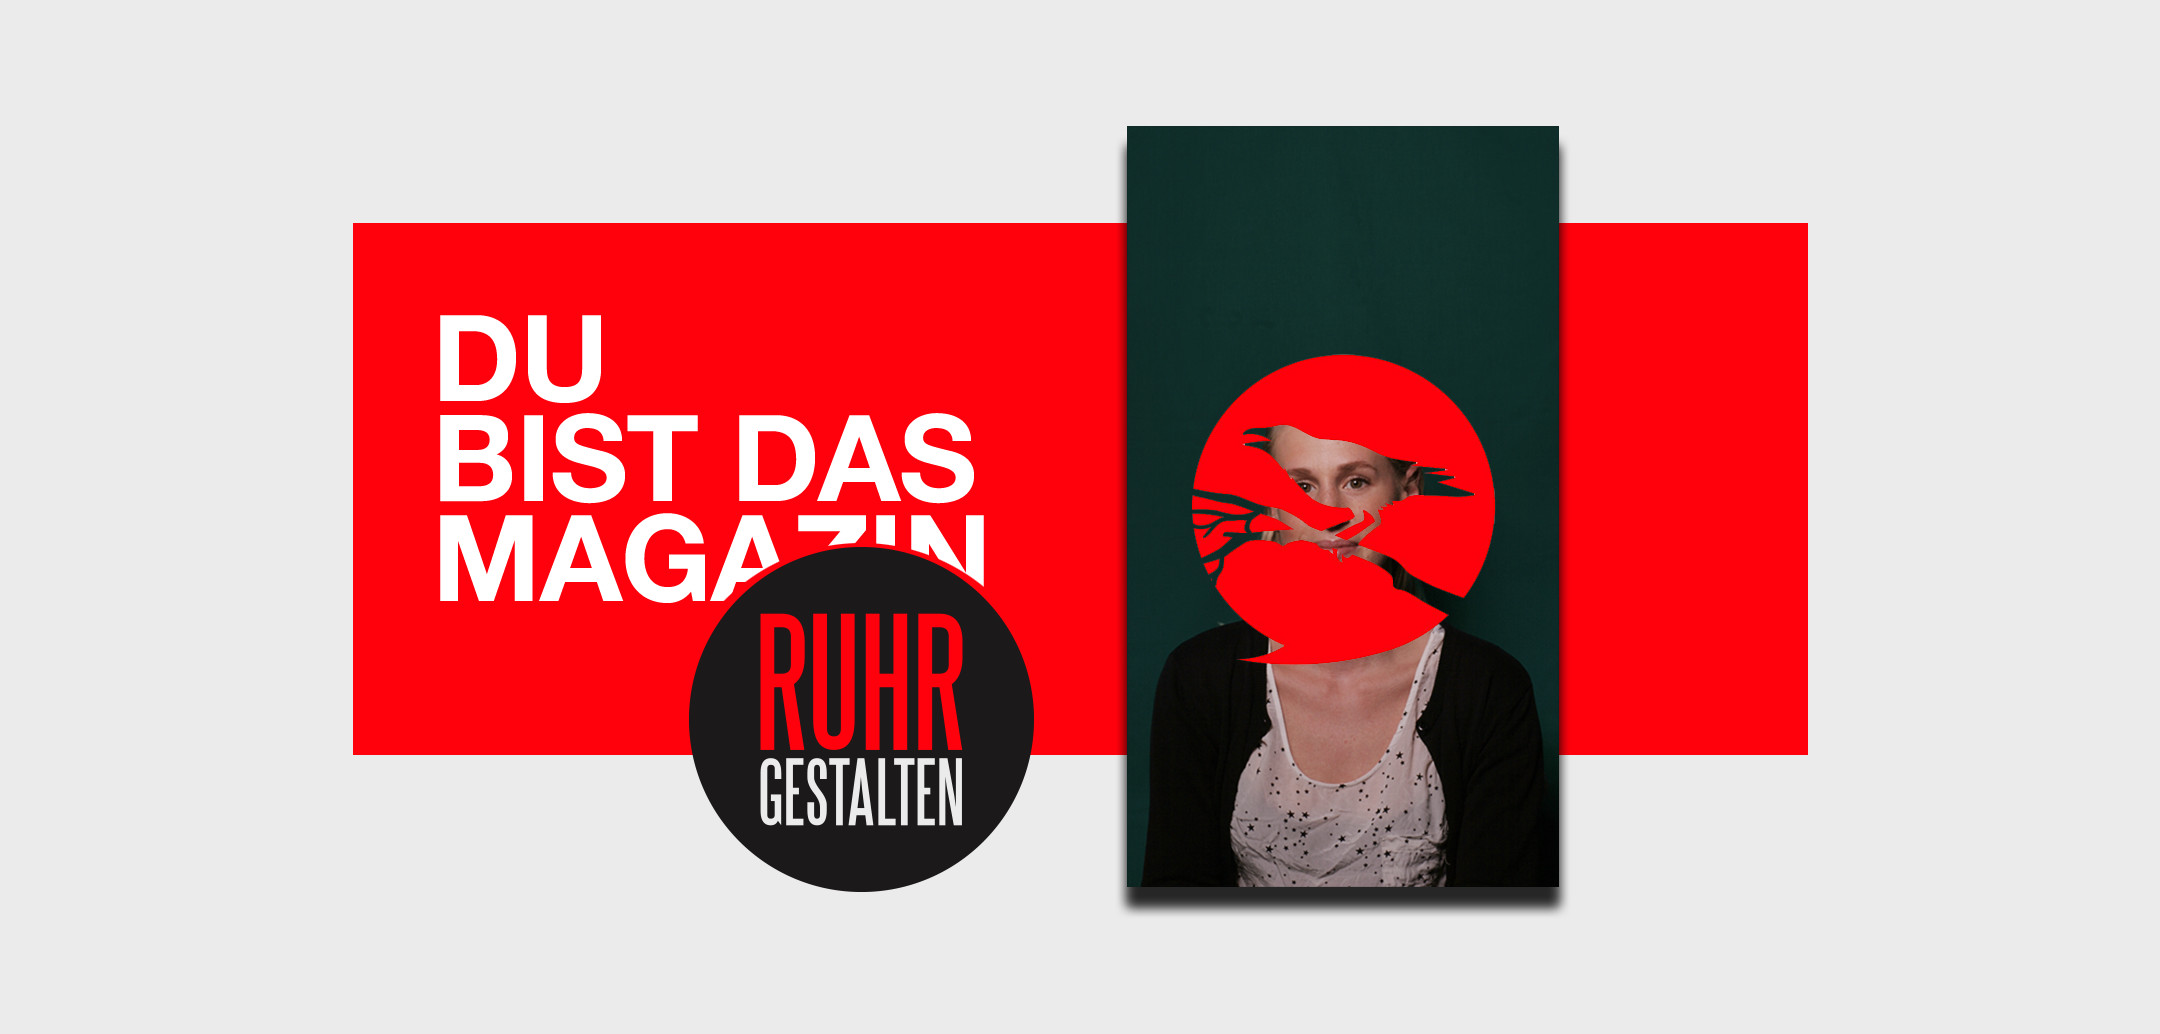 Project: Ruhr <mark>Gestalten</mark>